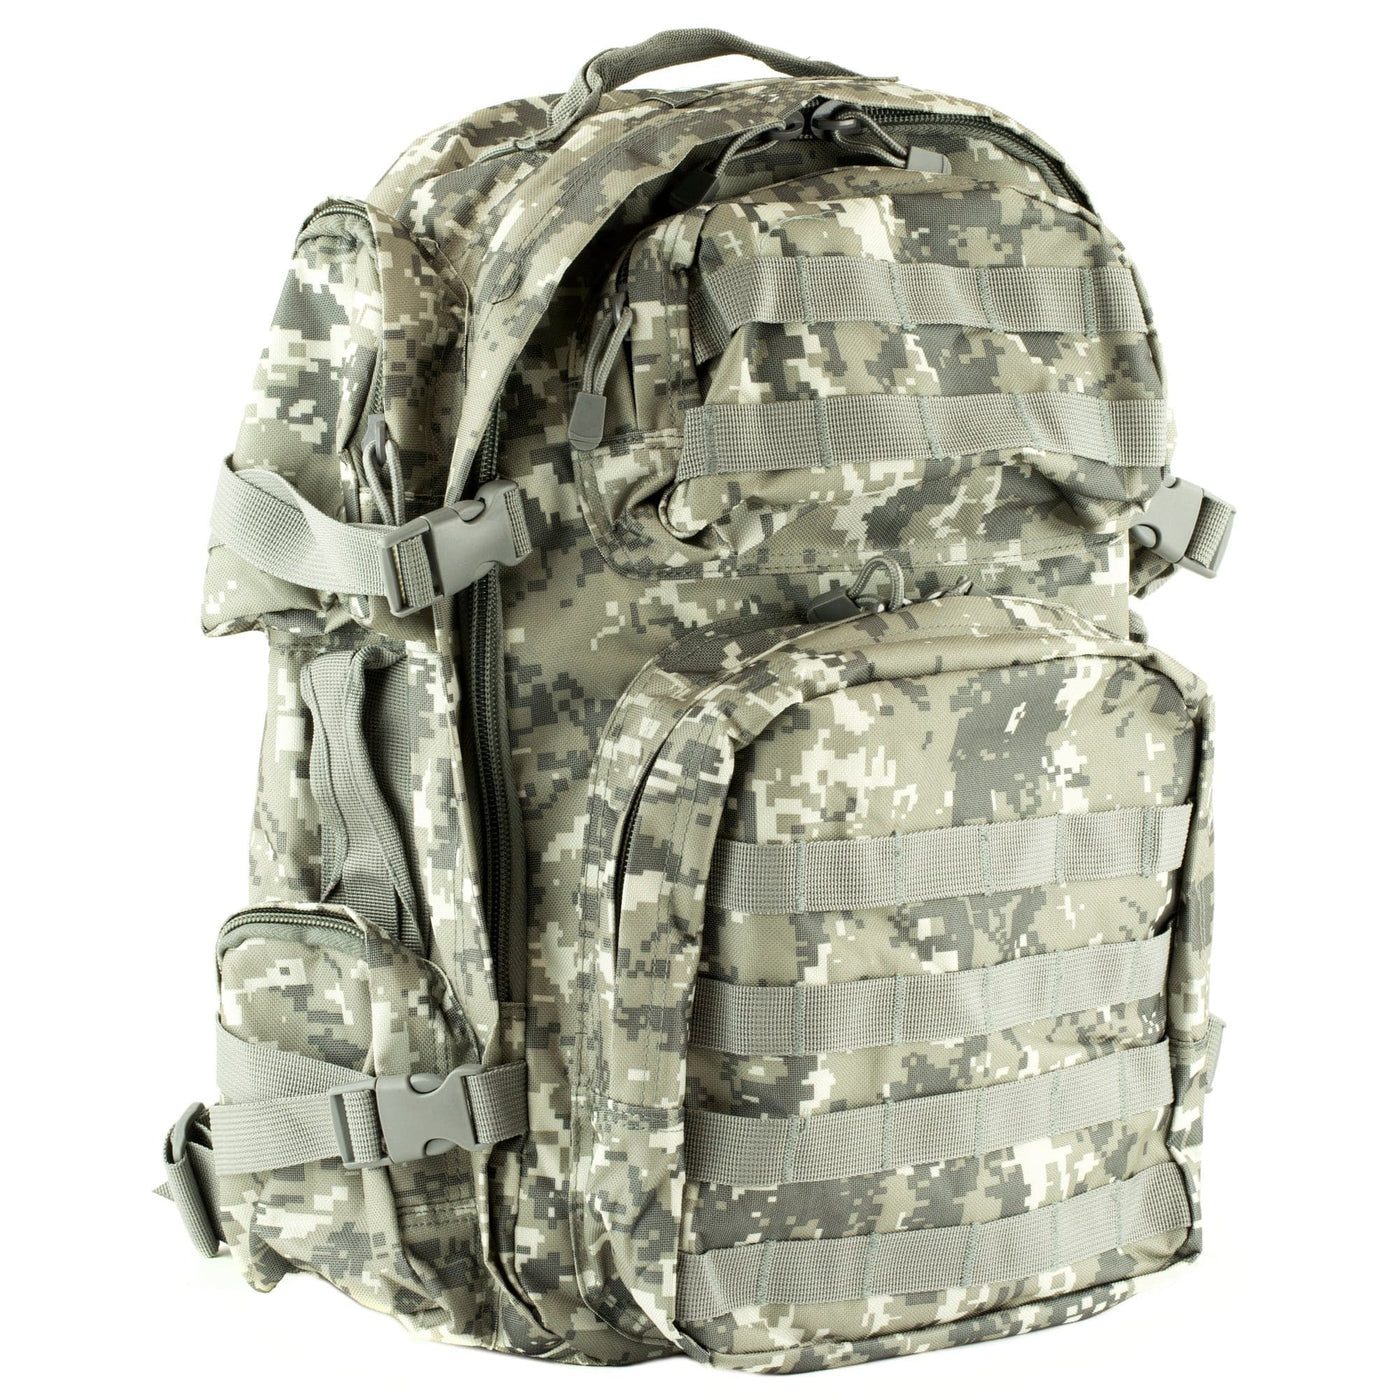 NCSTAR Ncstar Vism Tactical Backpack Dgtl Soft Gun Cases